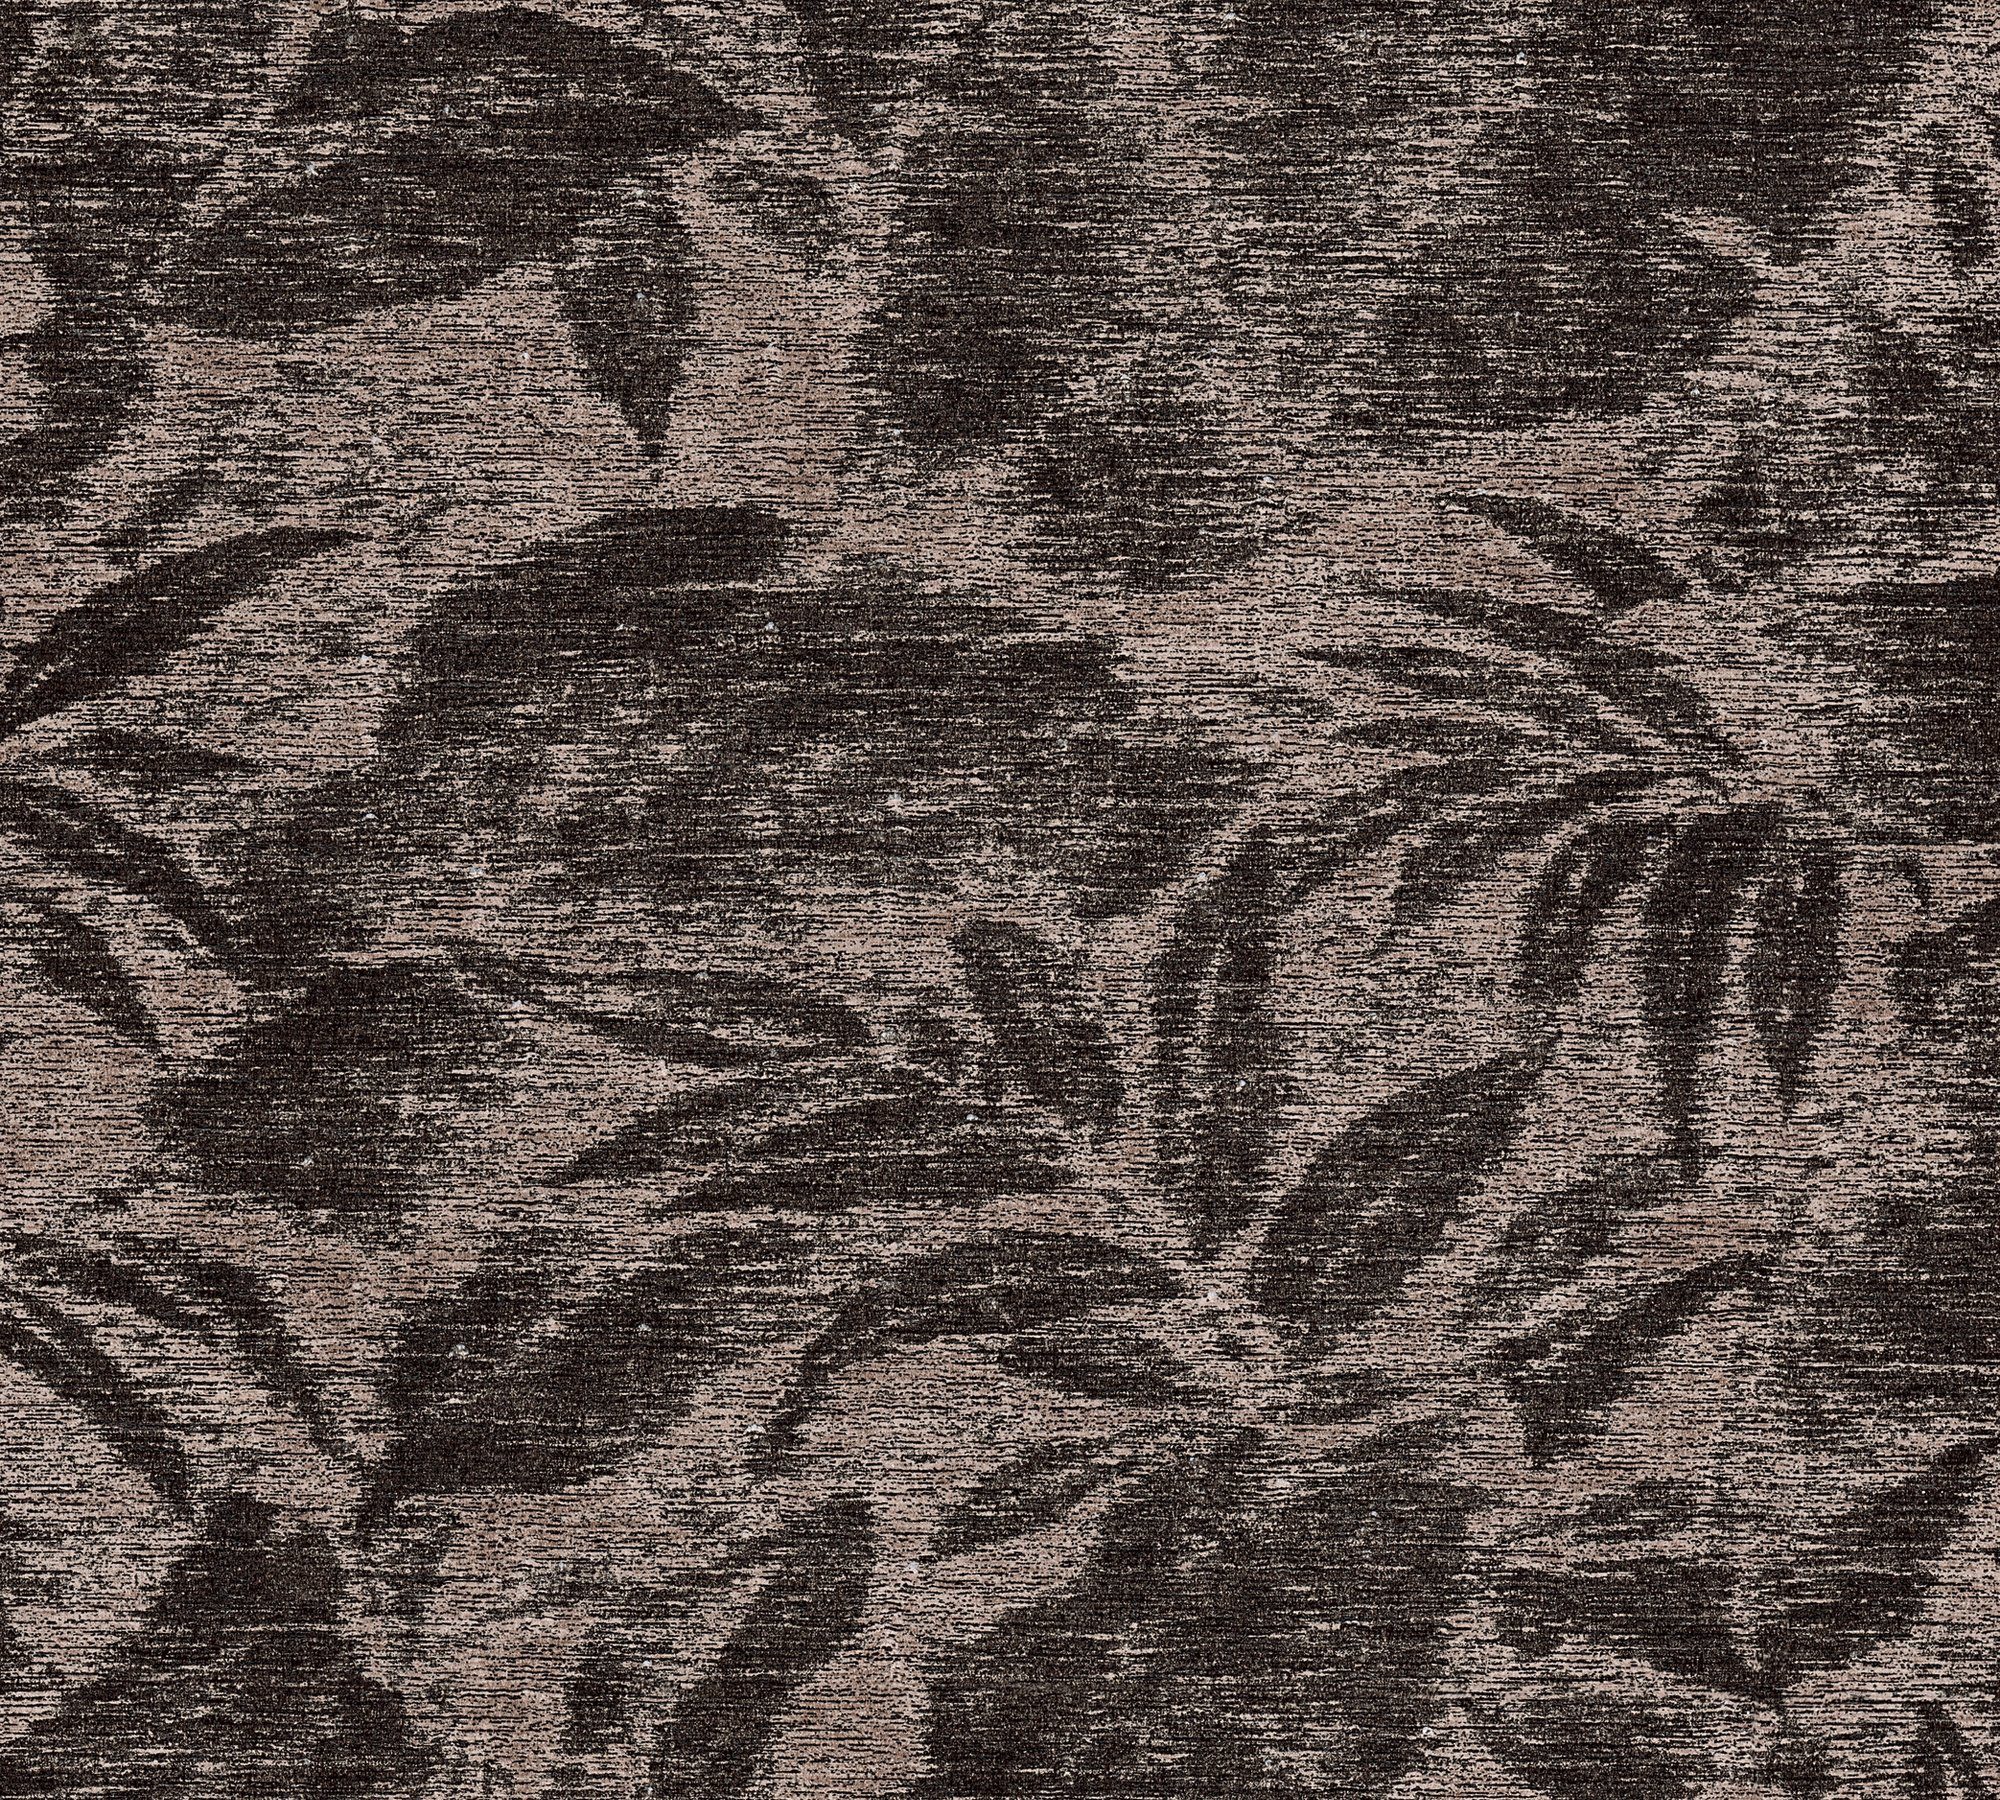 Tapete Palmentapete Dschungel braun Greenery Motiv, floral, A.S. Blätter mit Création Vliestapete